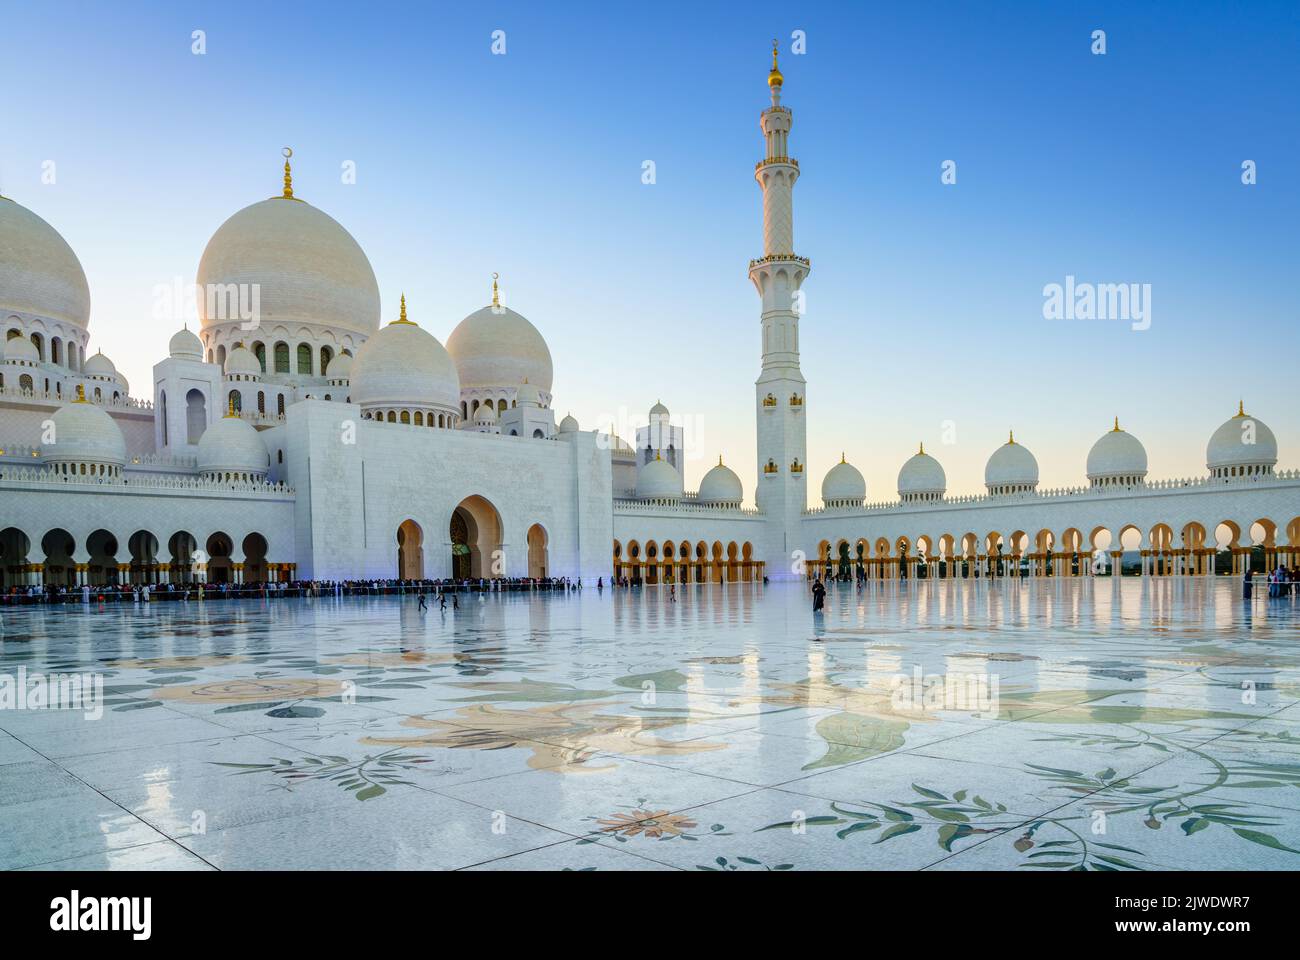 Abu Dhabi, UAE, December 30, 2016: Inner court of Sheikh Zayed Grand Mosque in Abu Dhabi, UAE at sunset Stock Photo